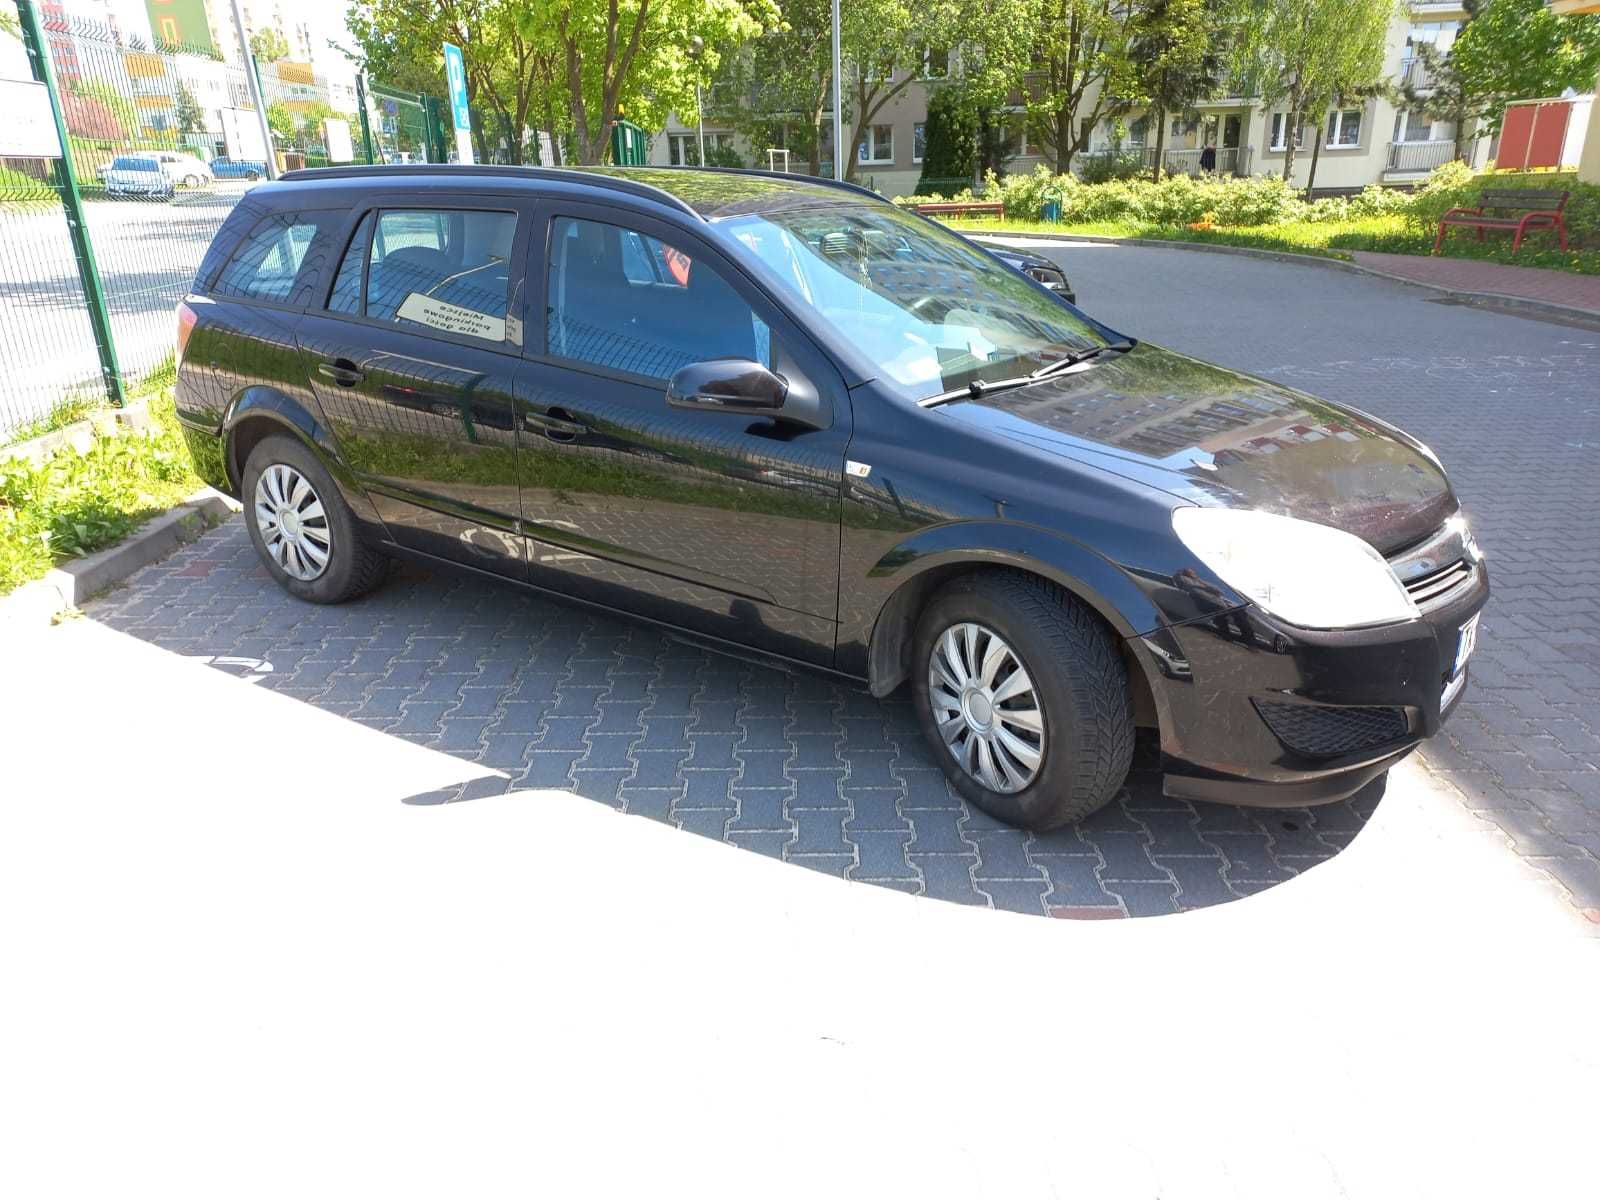 Opel Astra Kombi 1.6 benzyna